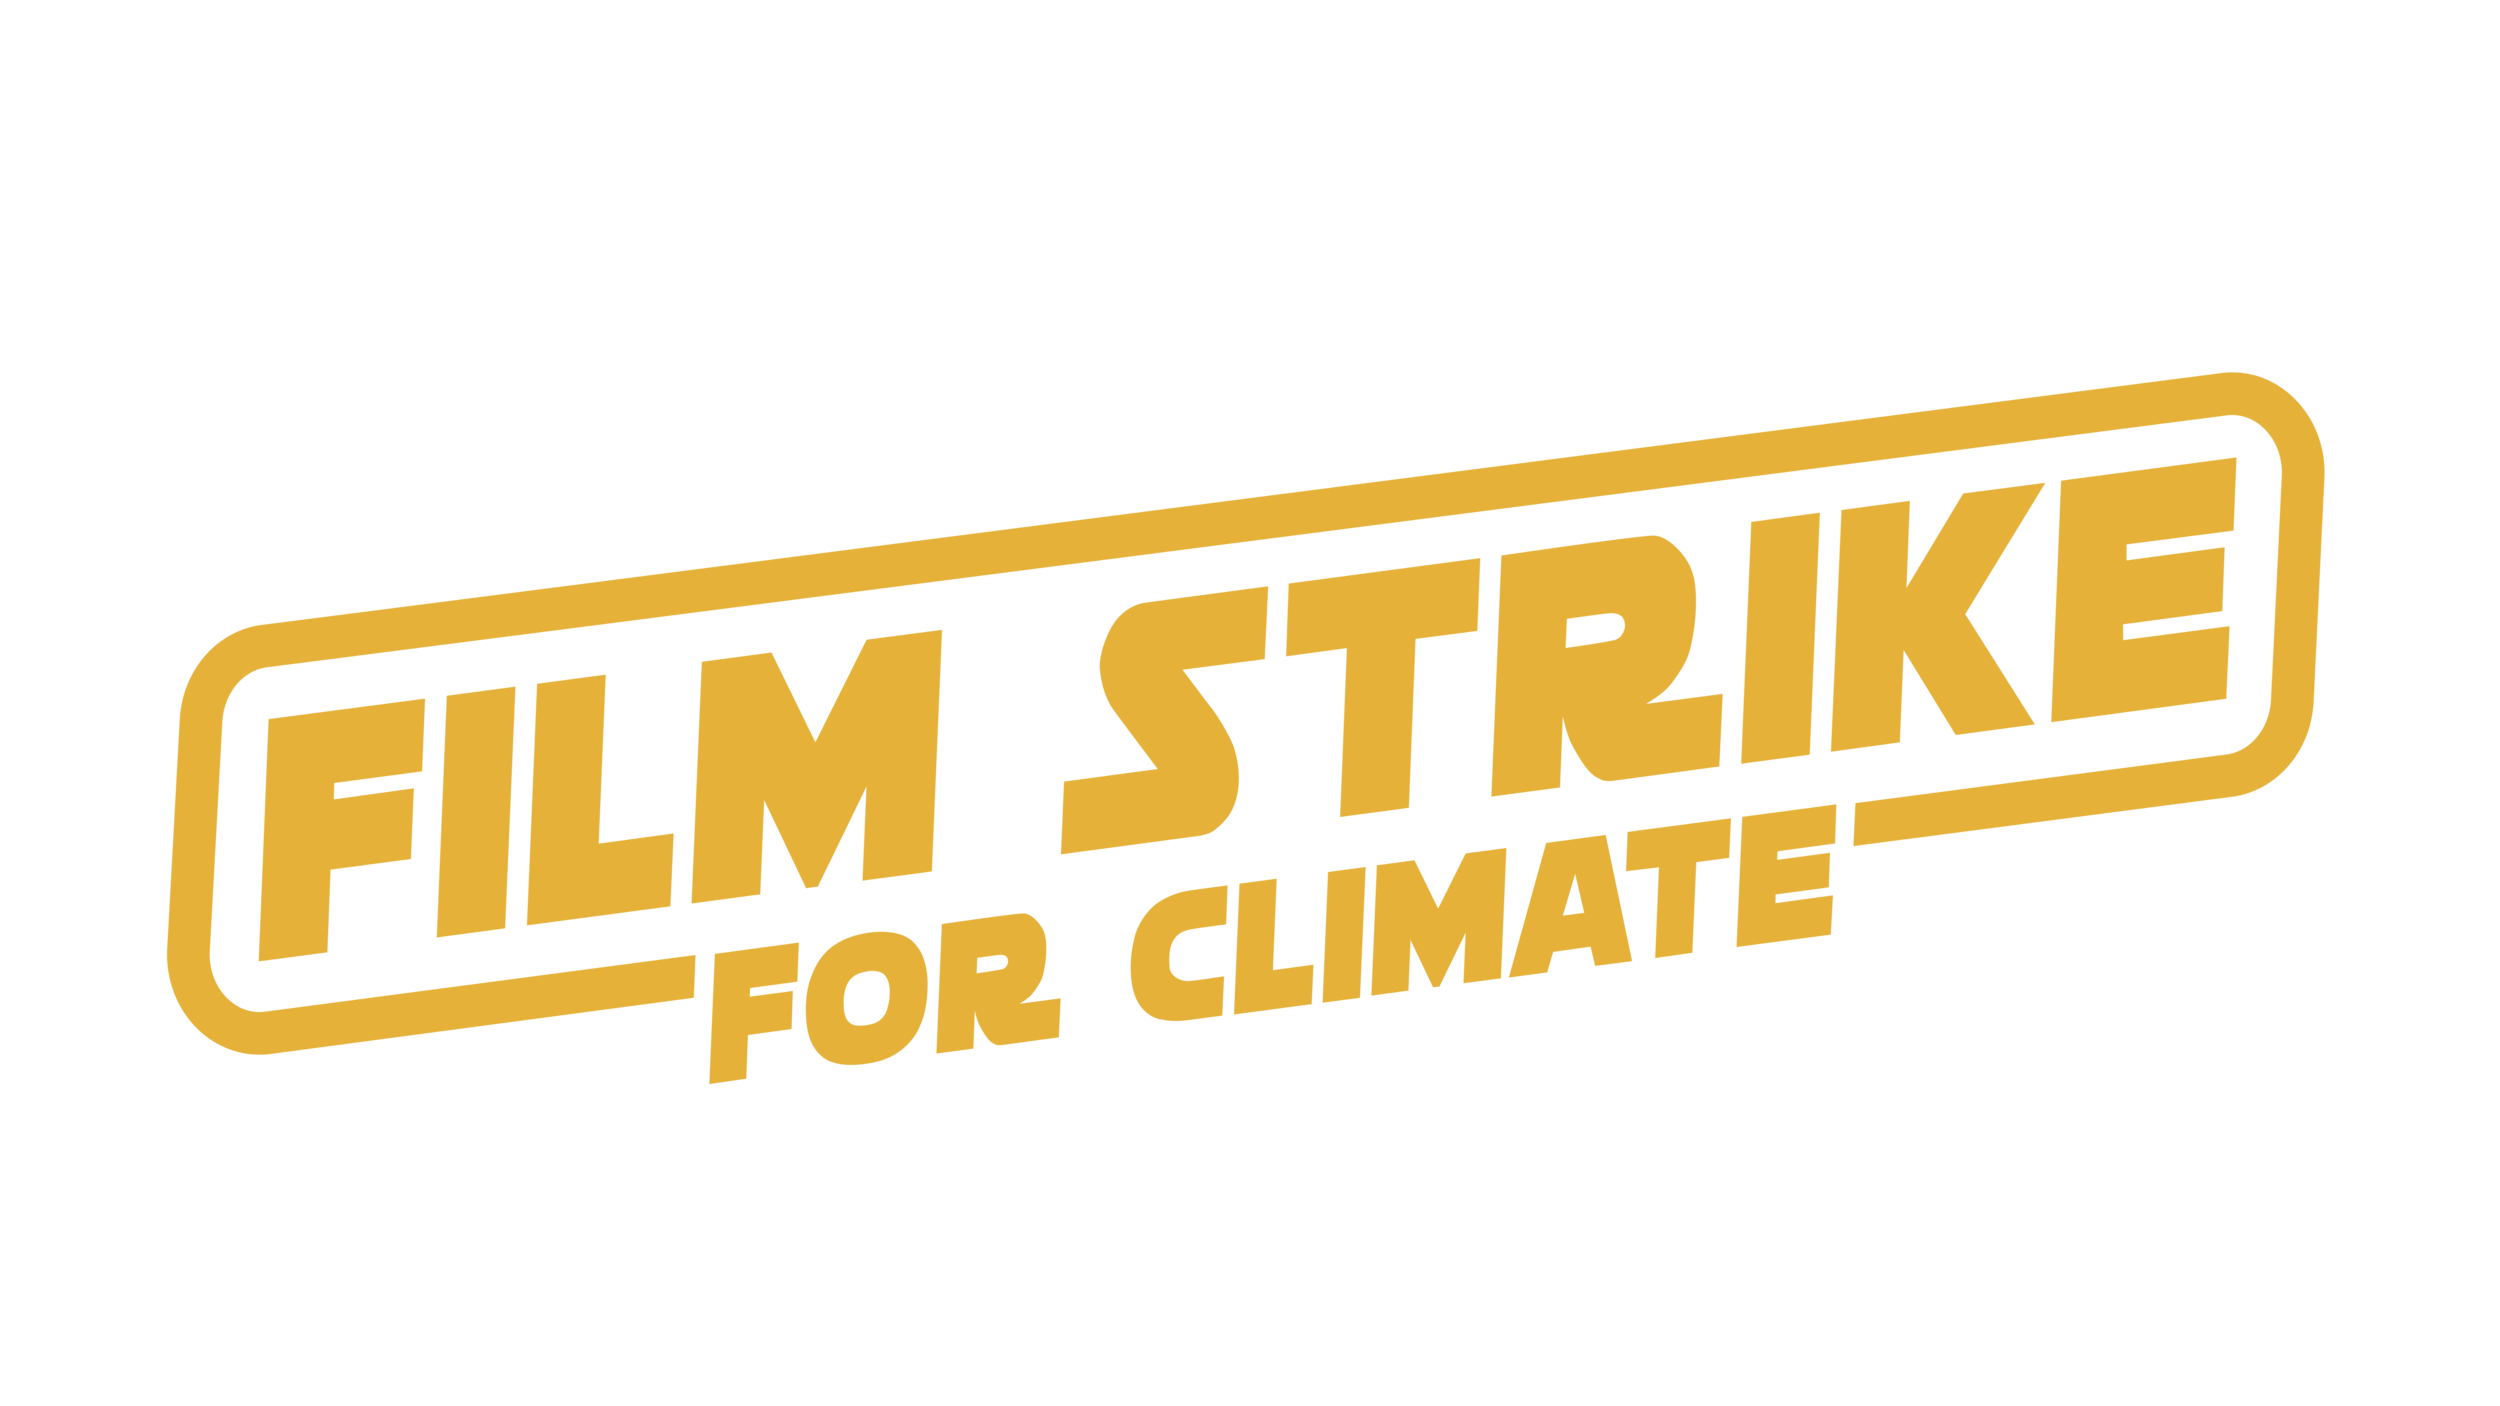 Film strike for climate